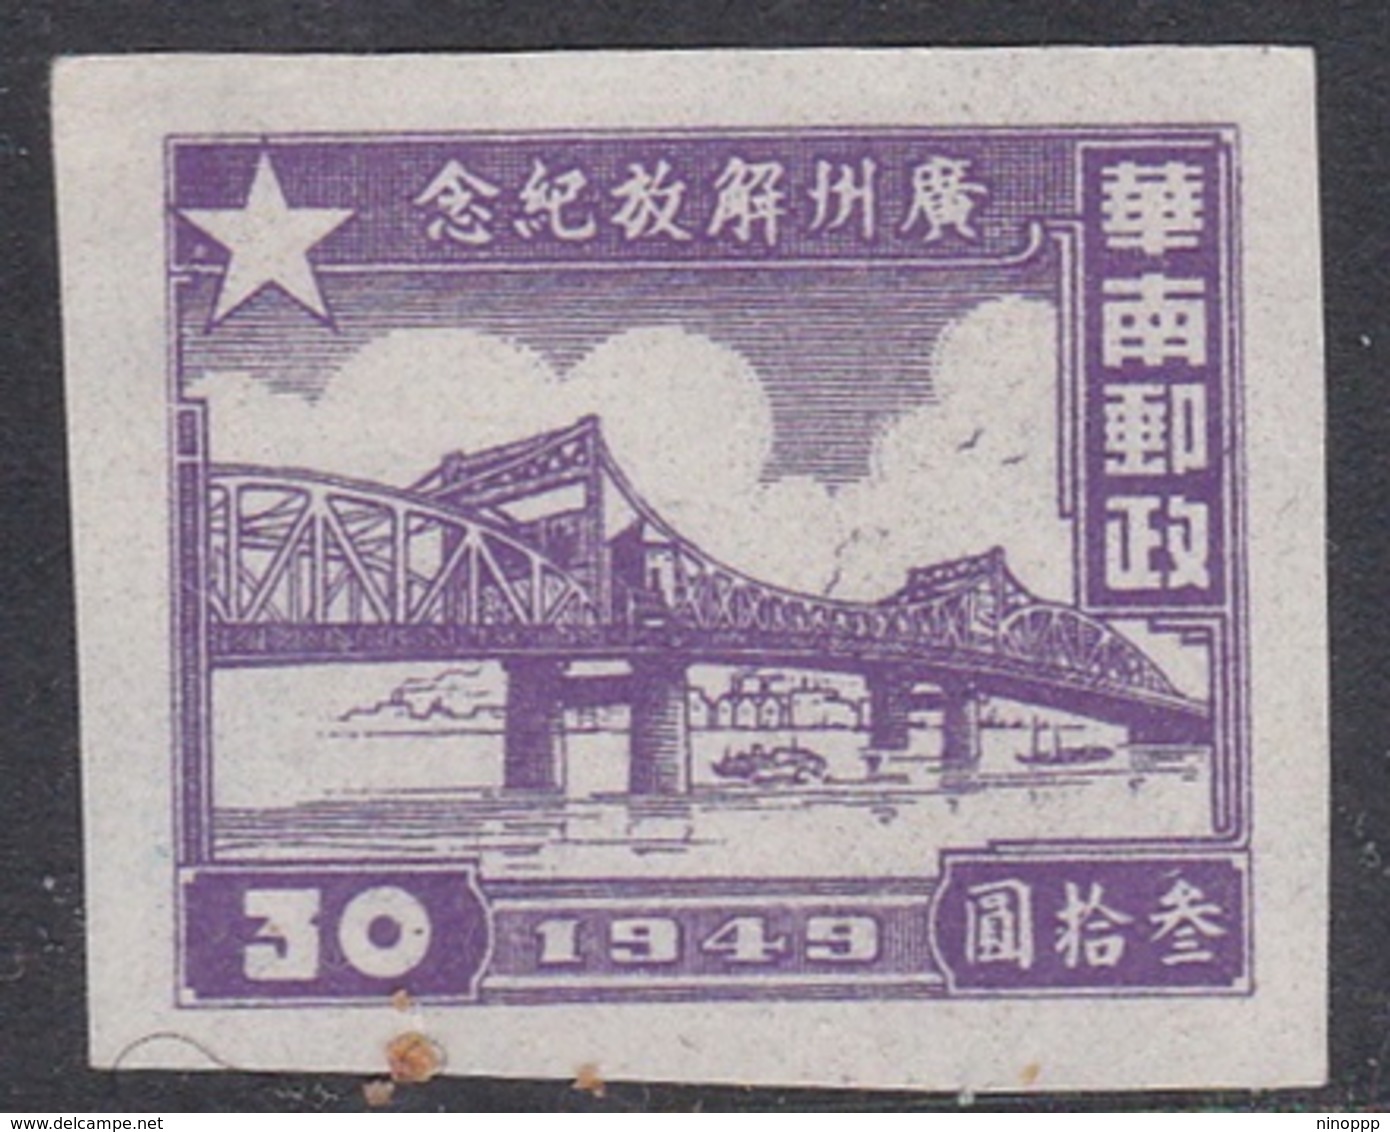 China South China Scott 7L3 1949 Pearl River Bridge, $ 30 Violet, Mint Never Hinged - Southern-China 1949-50